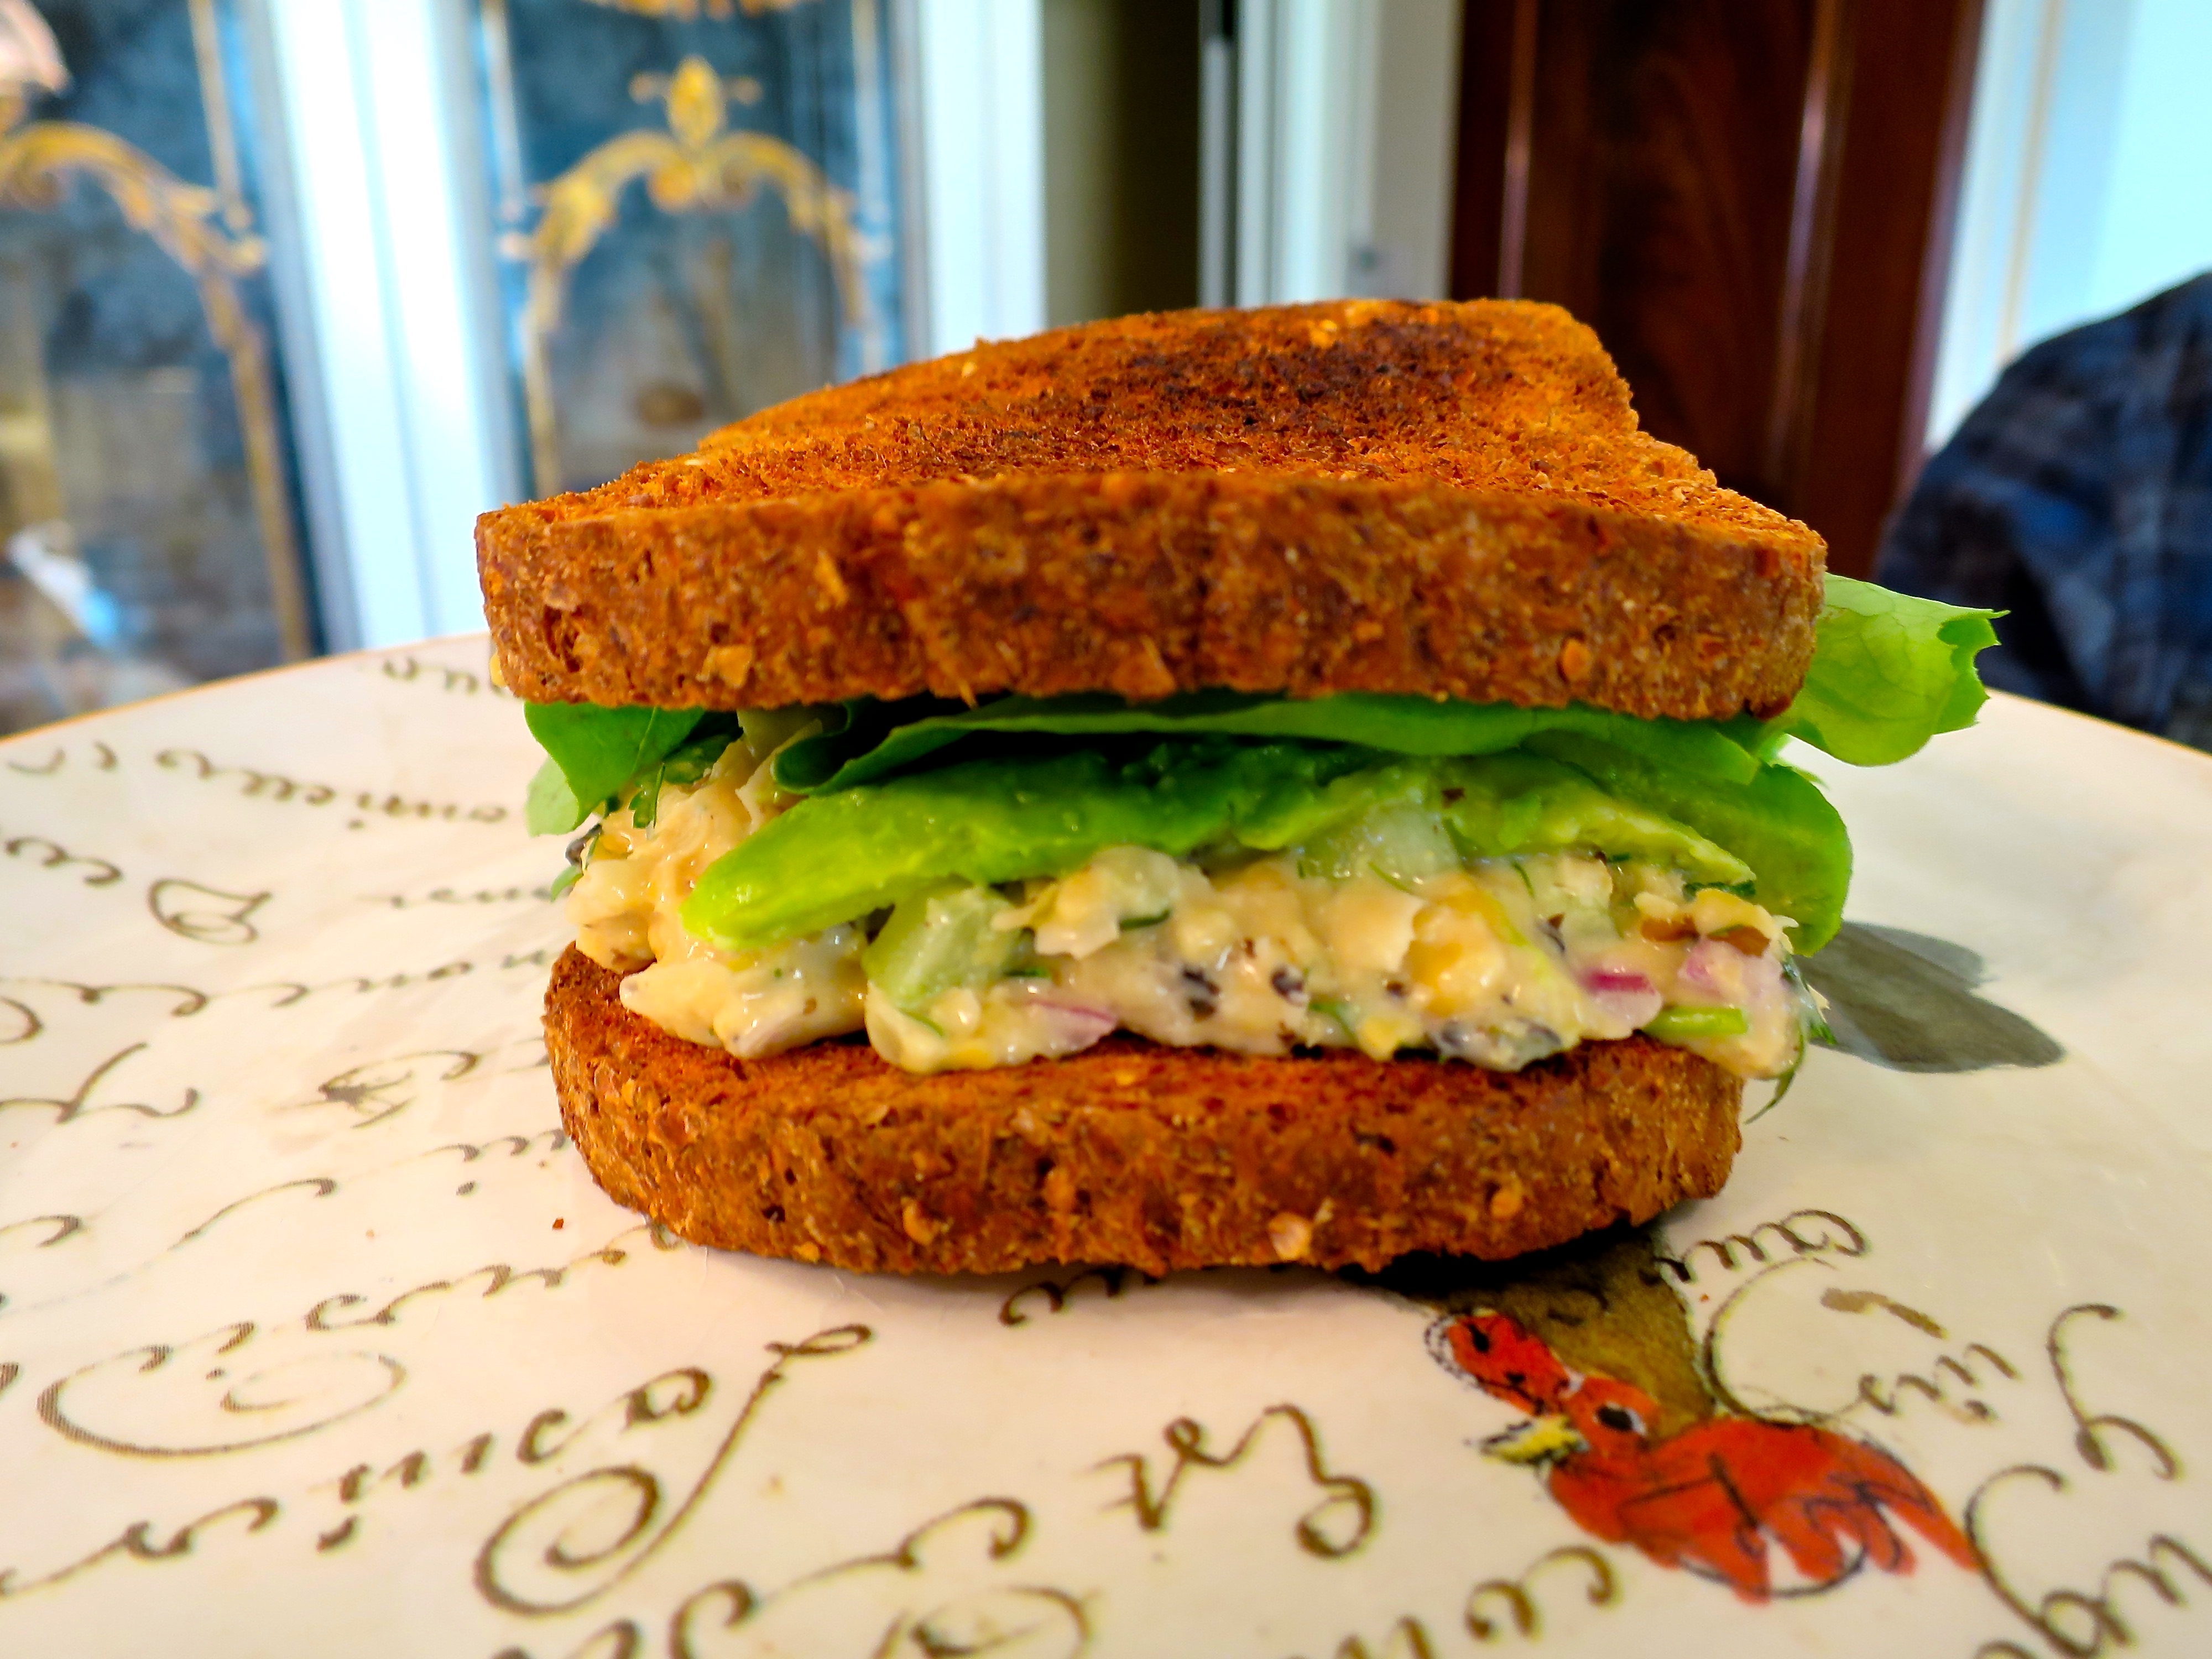 Tuna-less salad sandwich